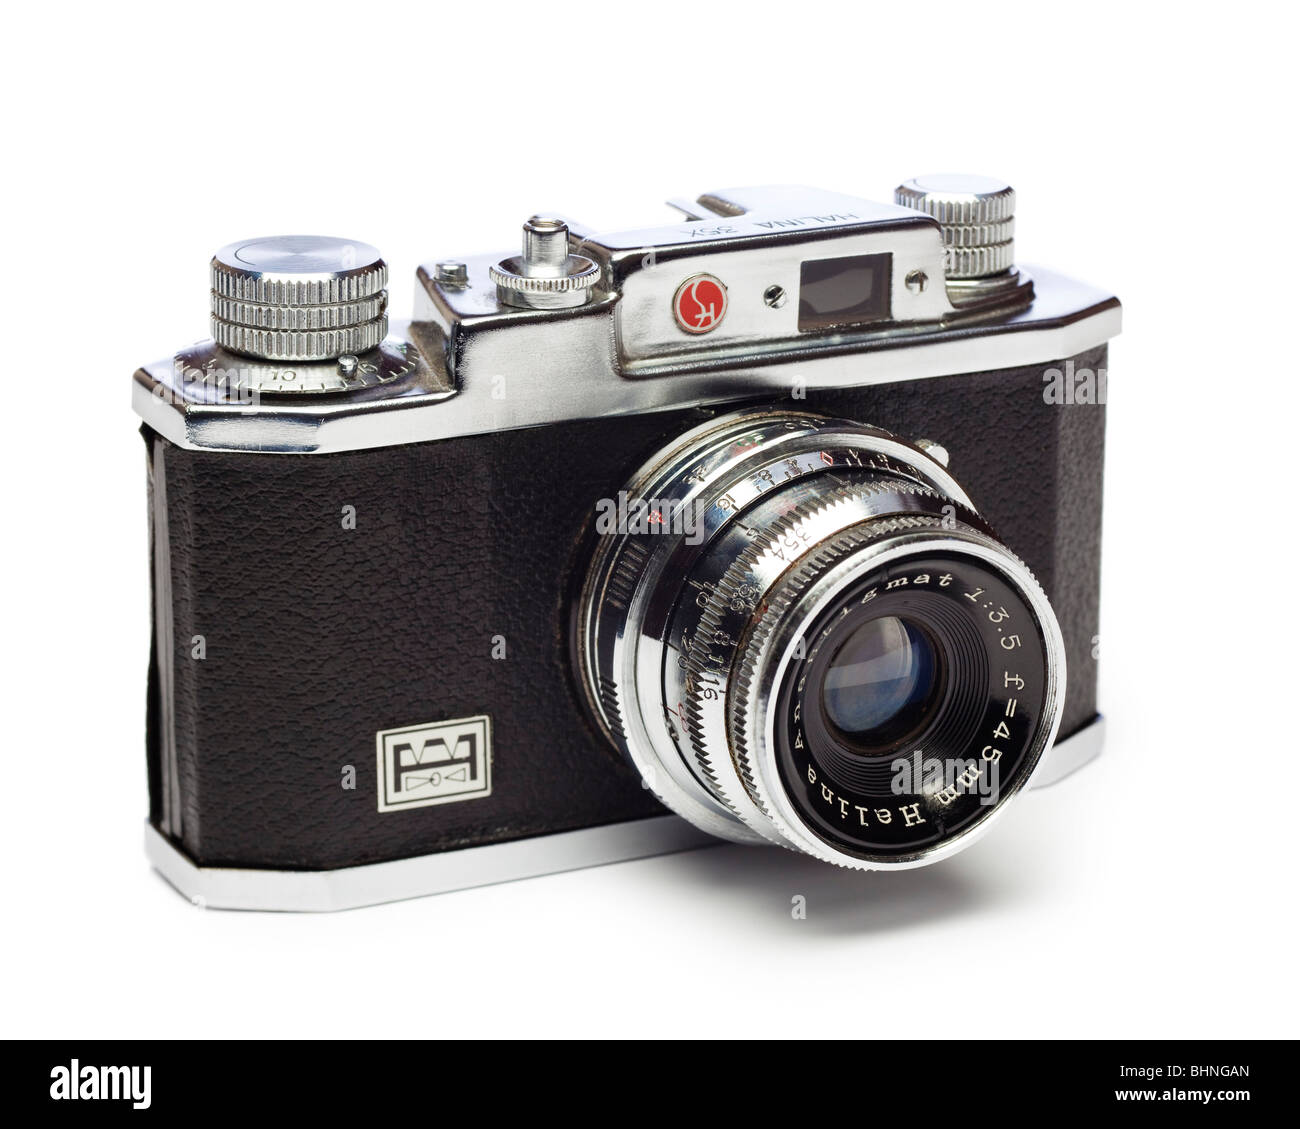 Vecchia fotocamera vintage - Halina 35x telemetro fotocamera a pellicola Foto Stock